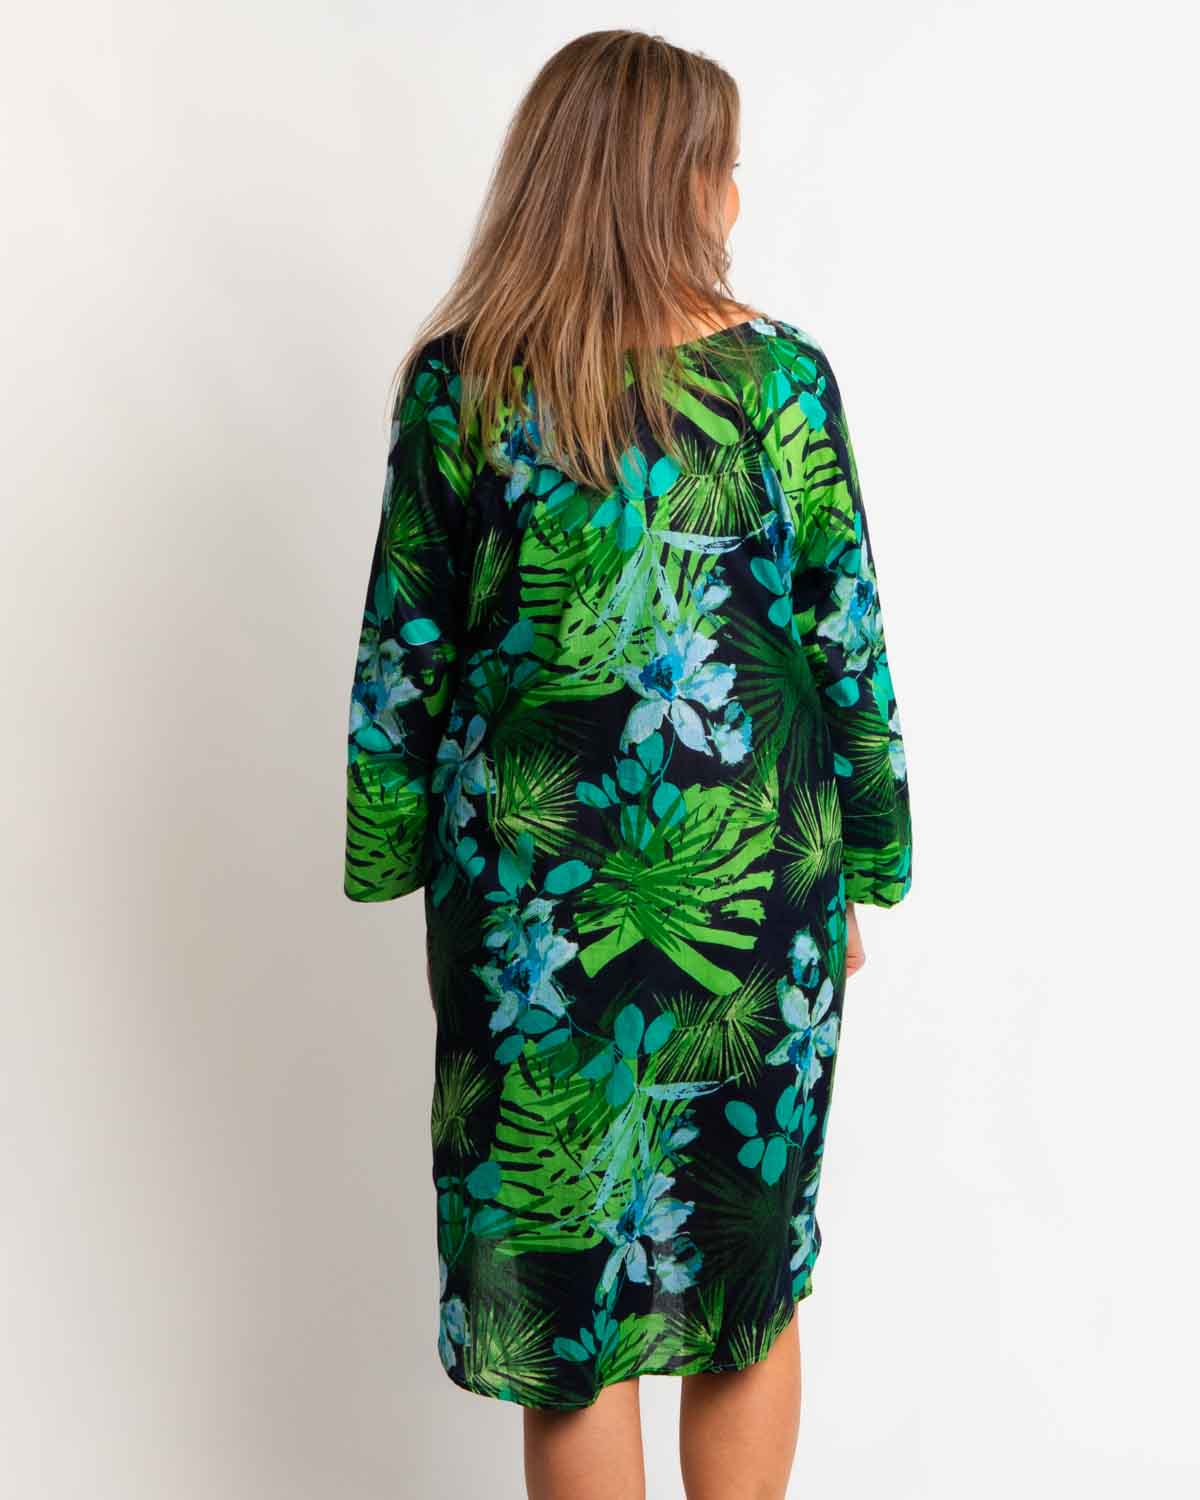 Free Size Proserpine Dress in Lime Green Garden Print